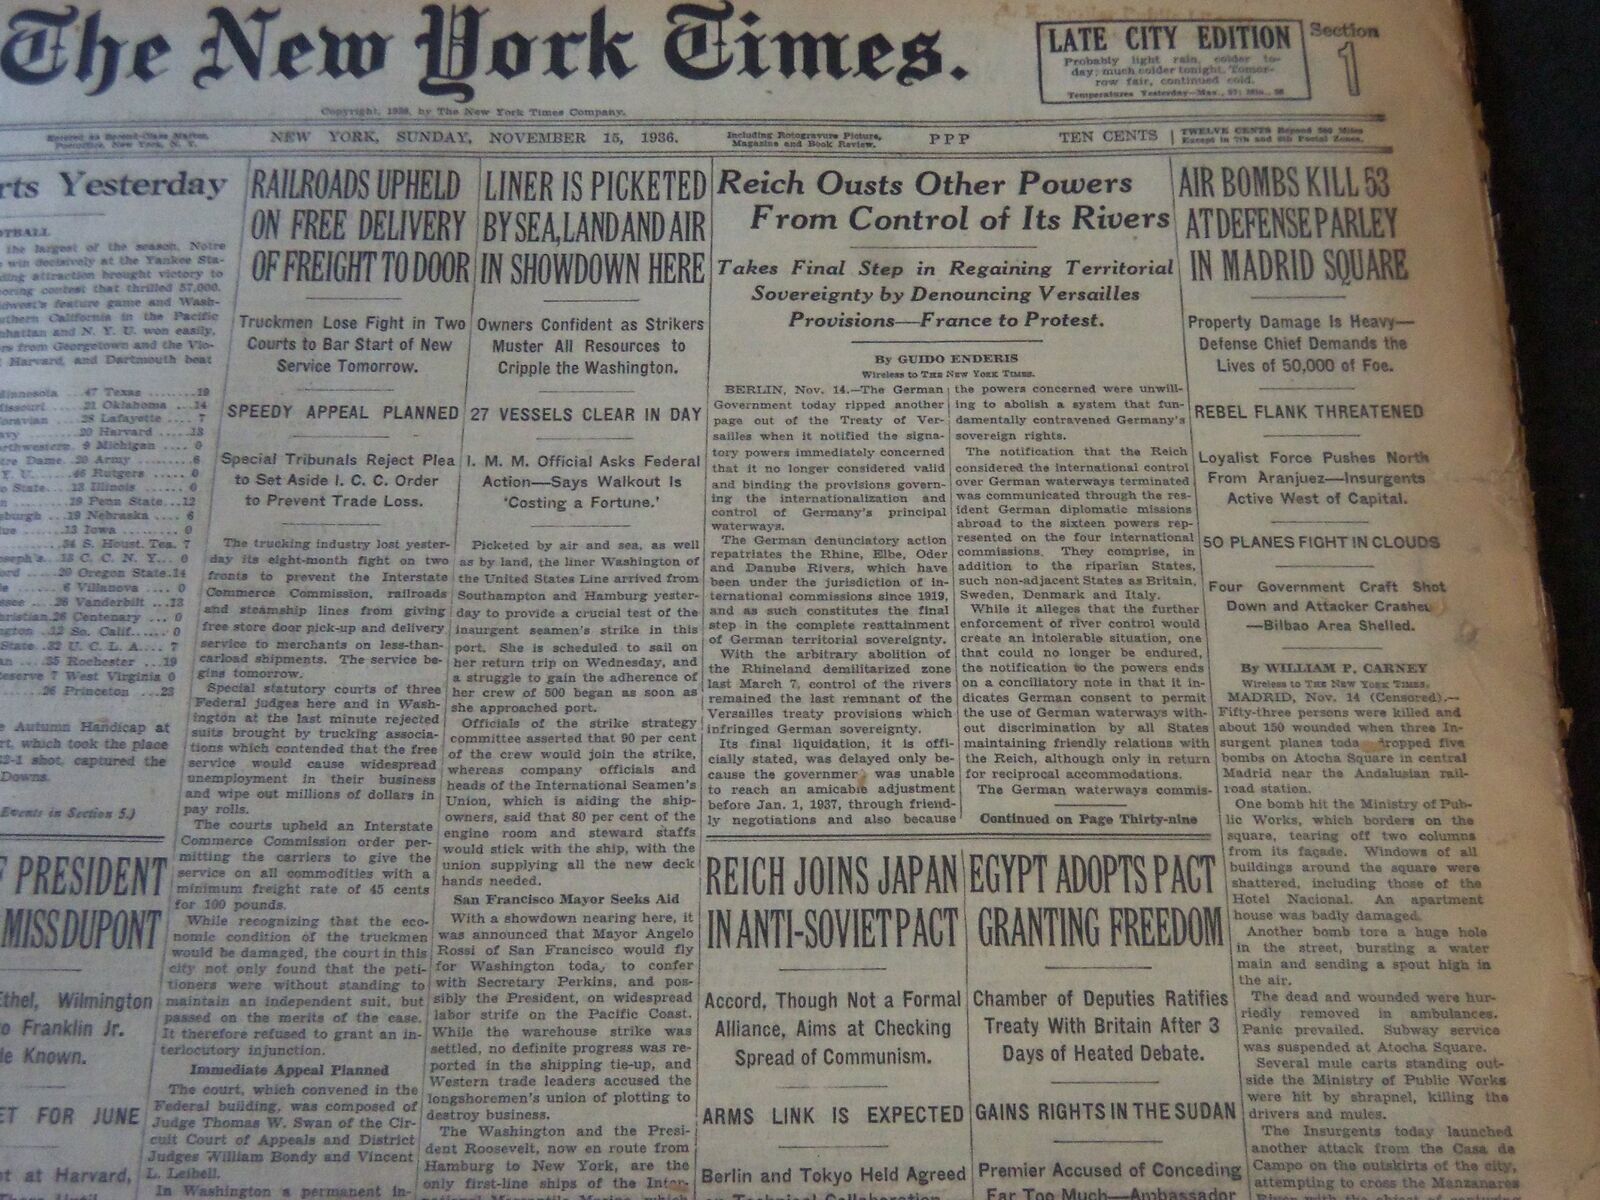 1936 NOVEMBER 15 NEW YORK TIMES - AIR BOMBS KILL 53 IN MADRID SQUARE - NT 6713